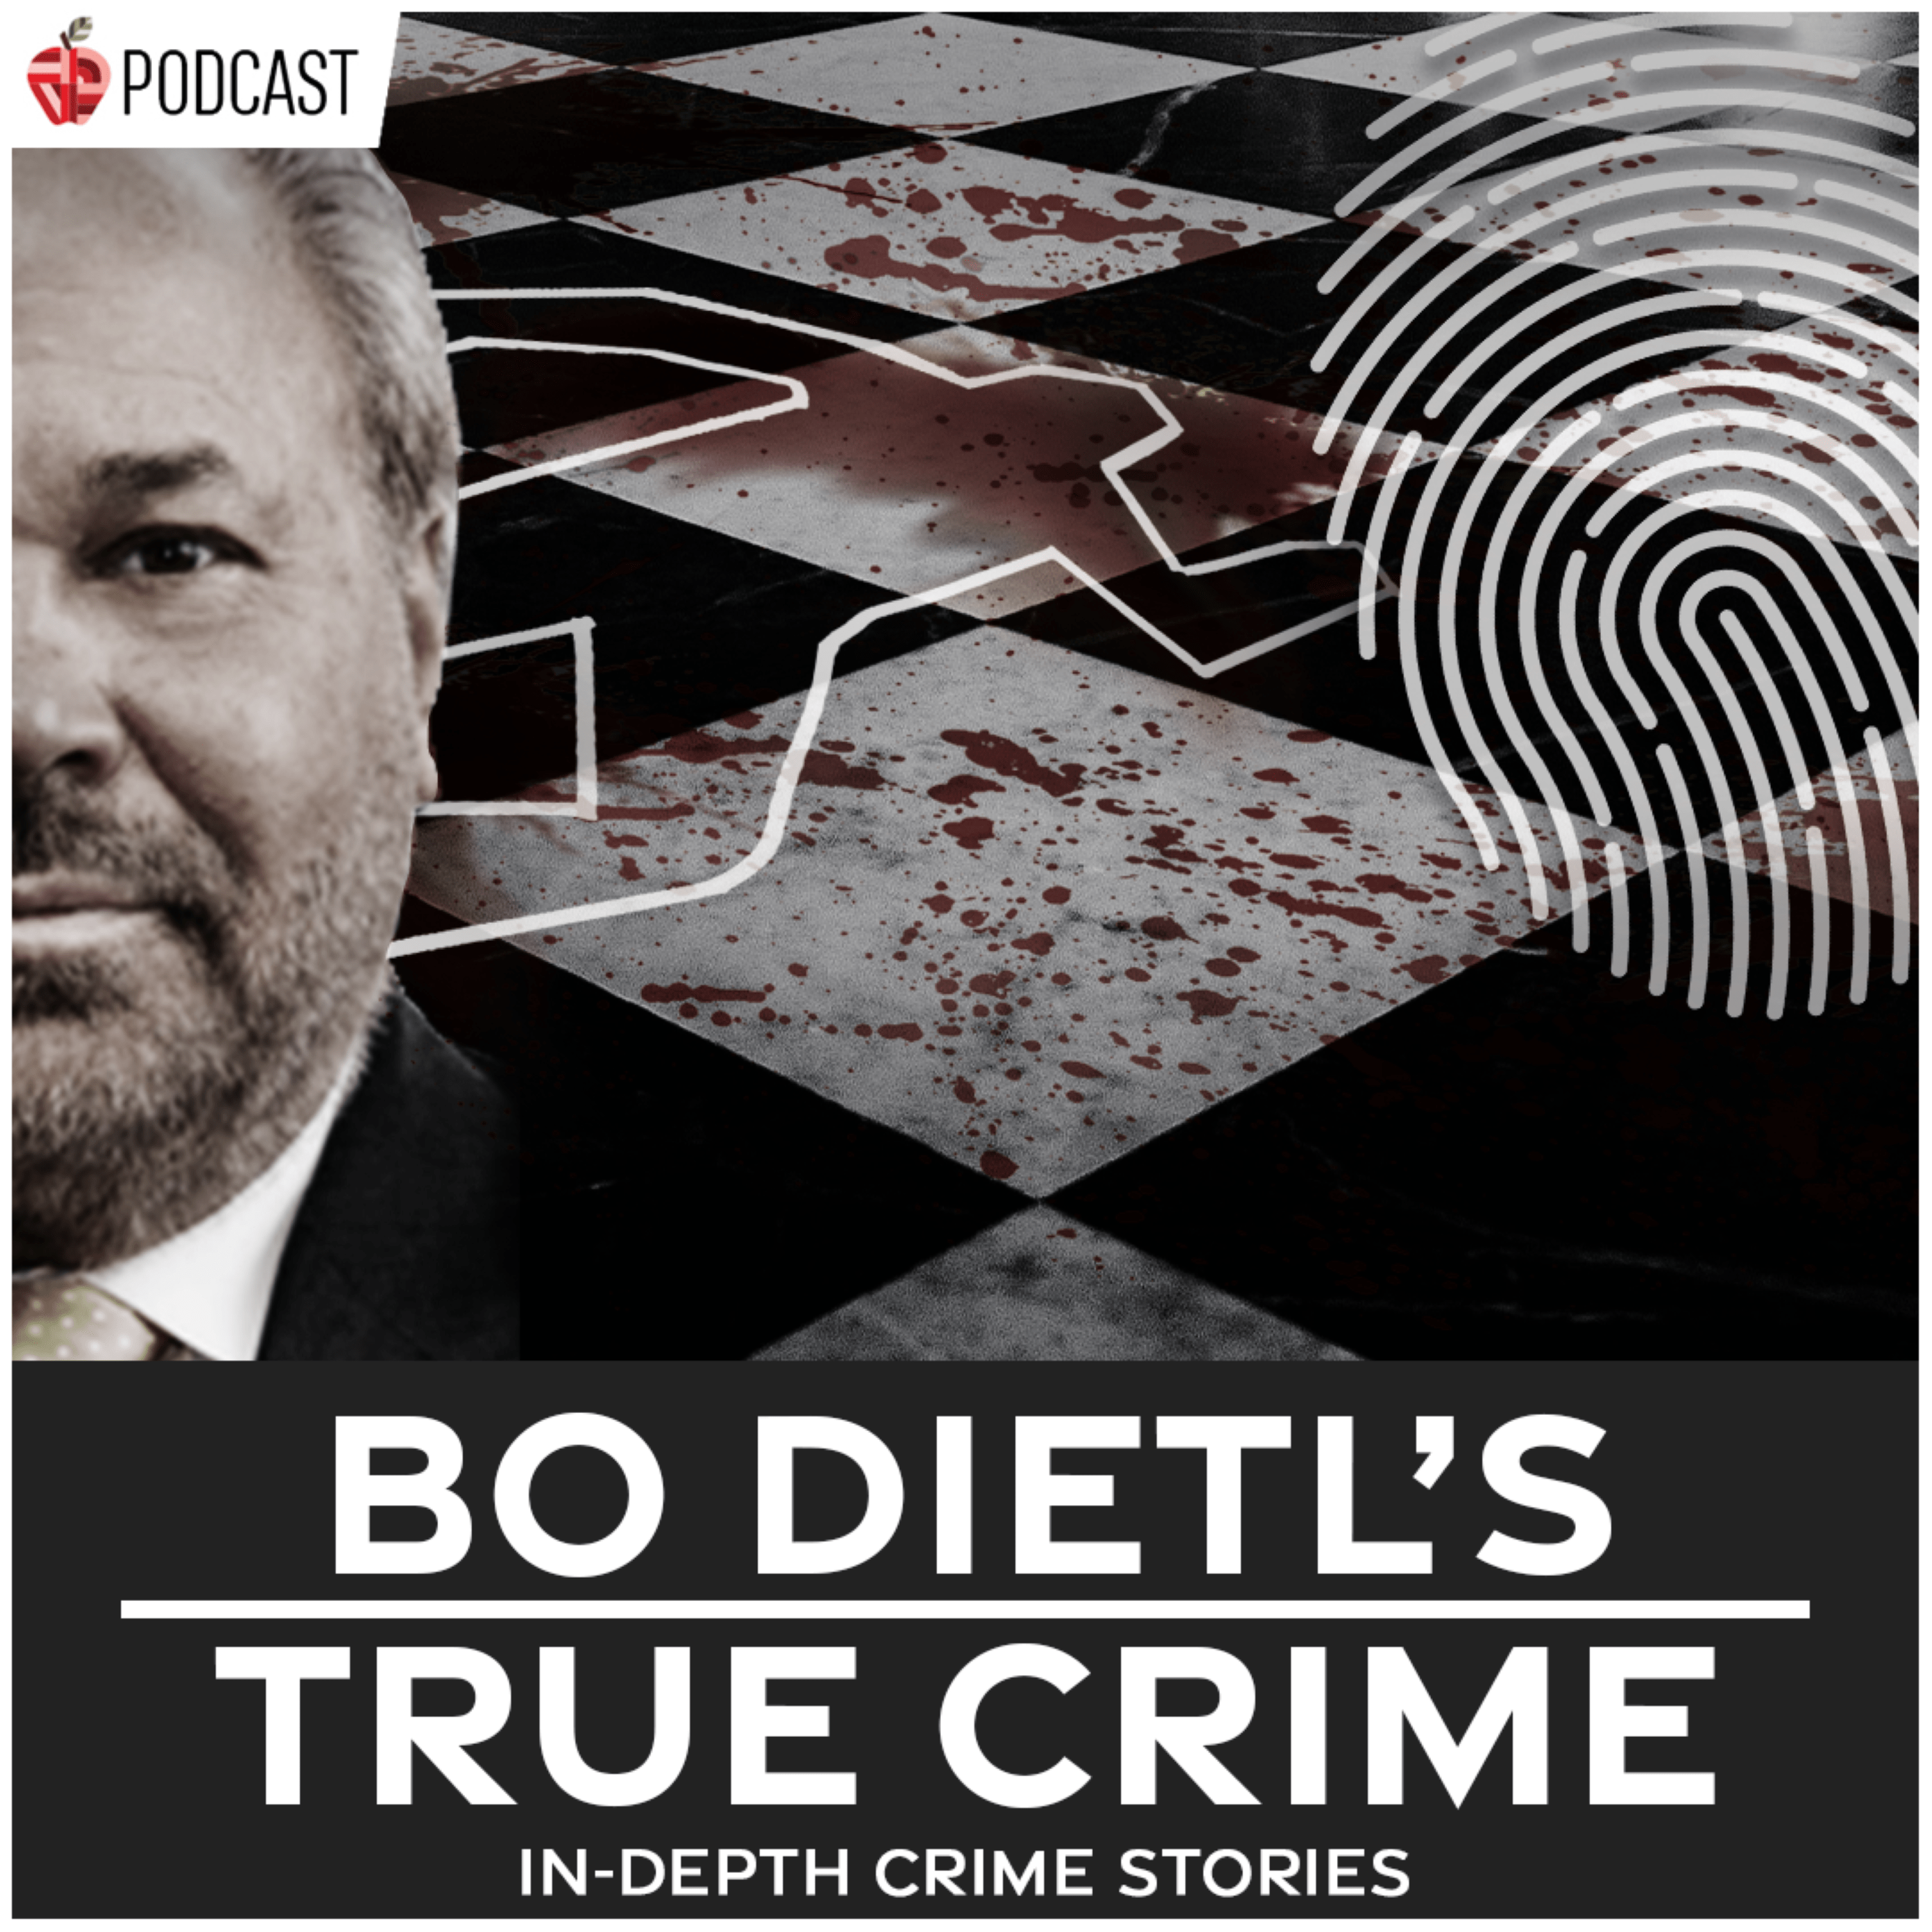 Bo Dietl's True Crime